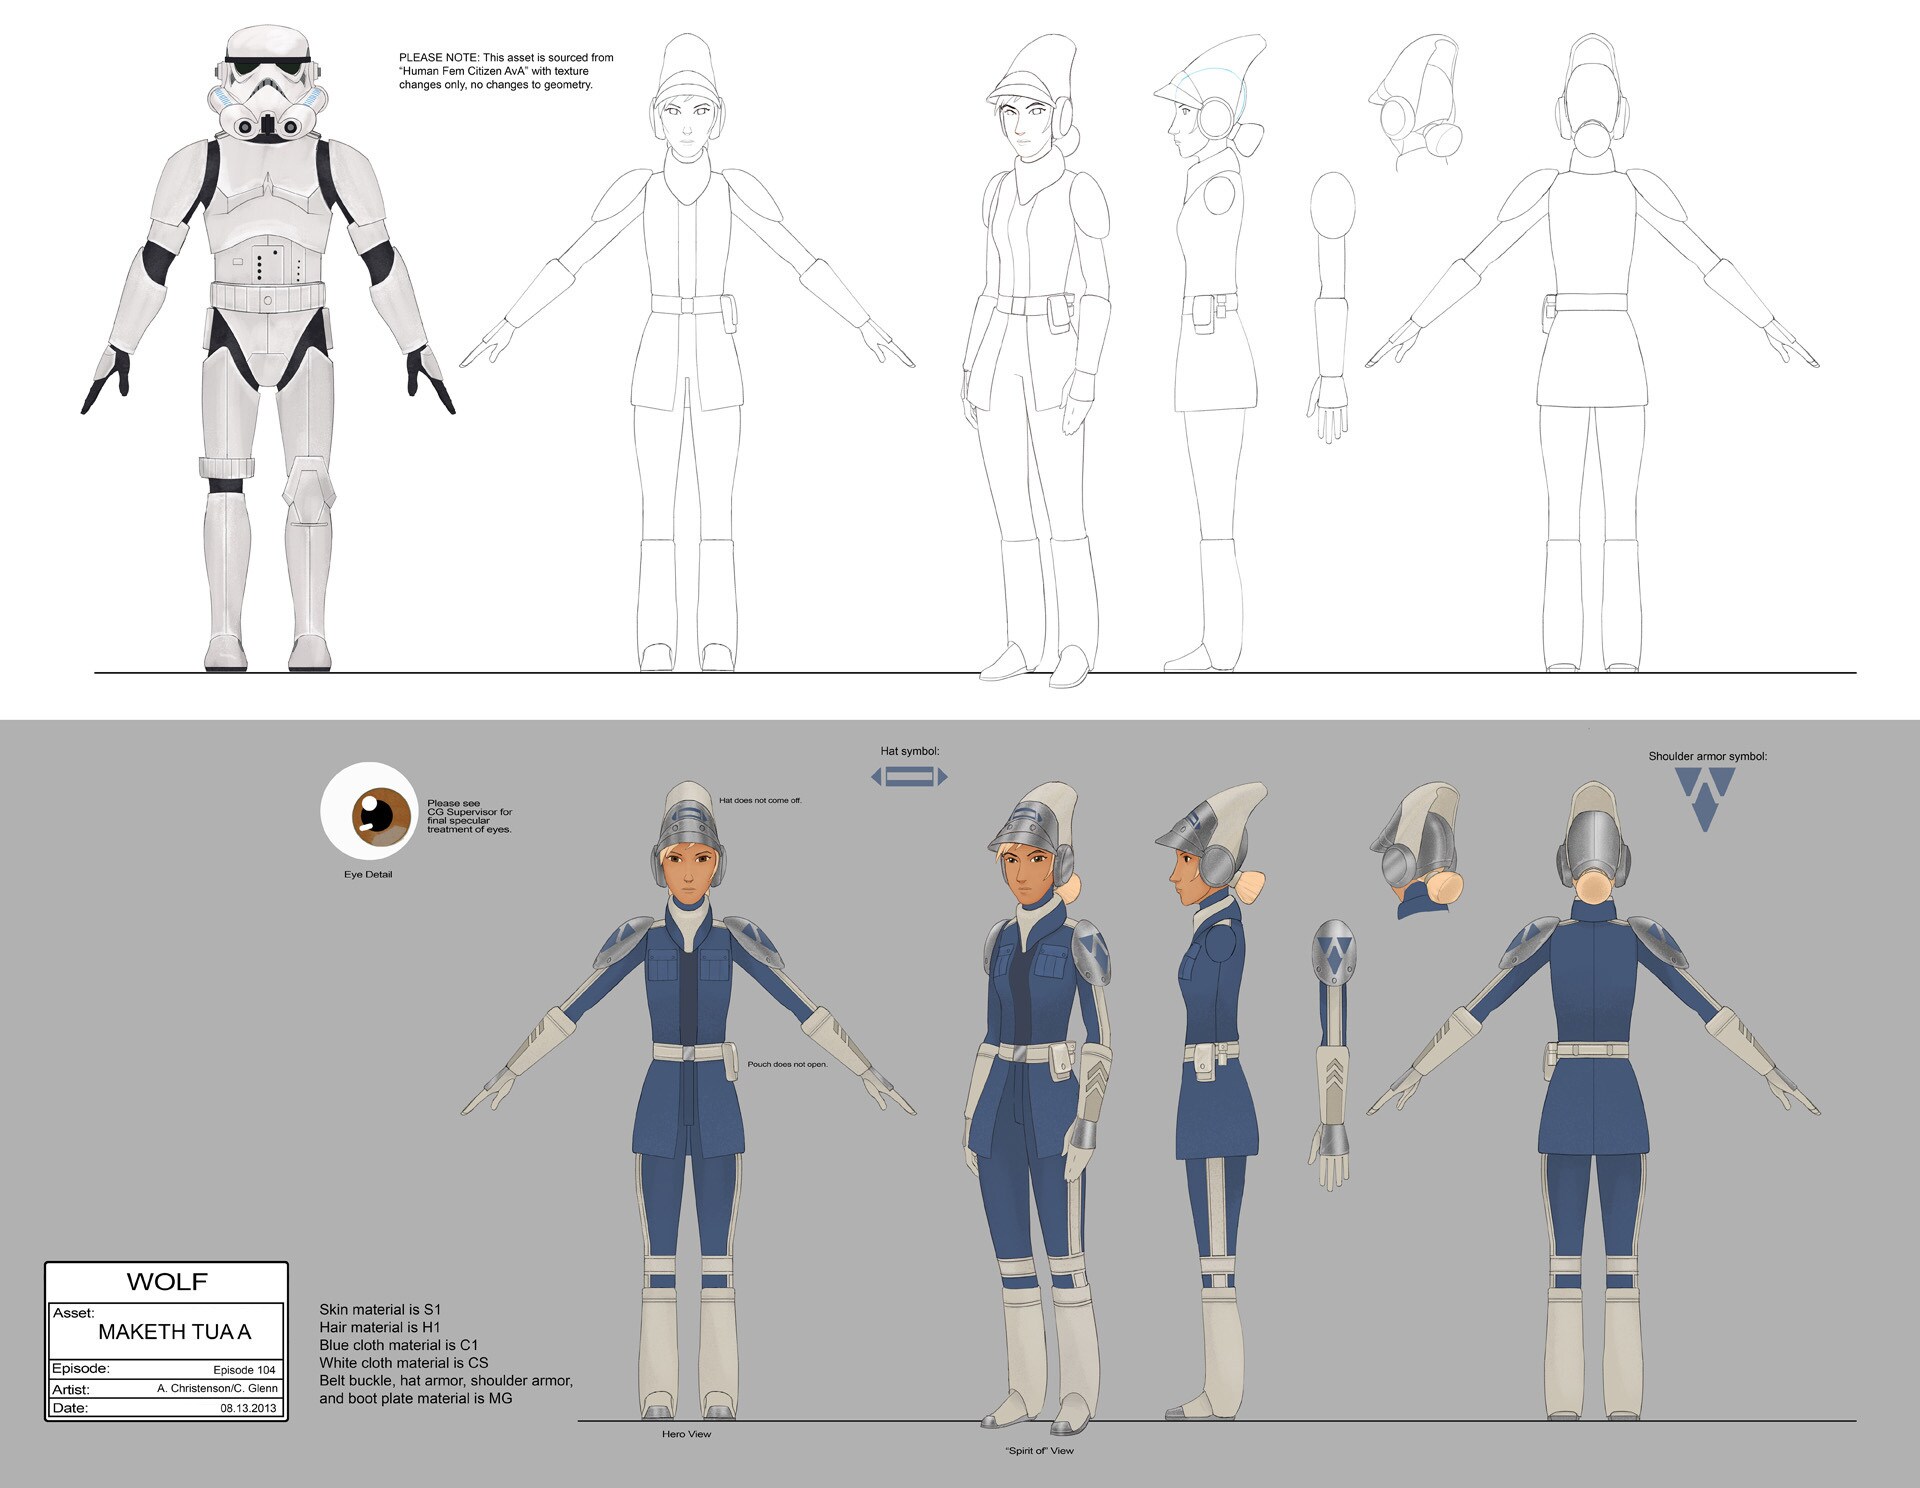 Maketh Tua full character illustration by Amy Beth Christenson and Chris Glenn.